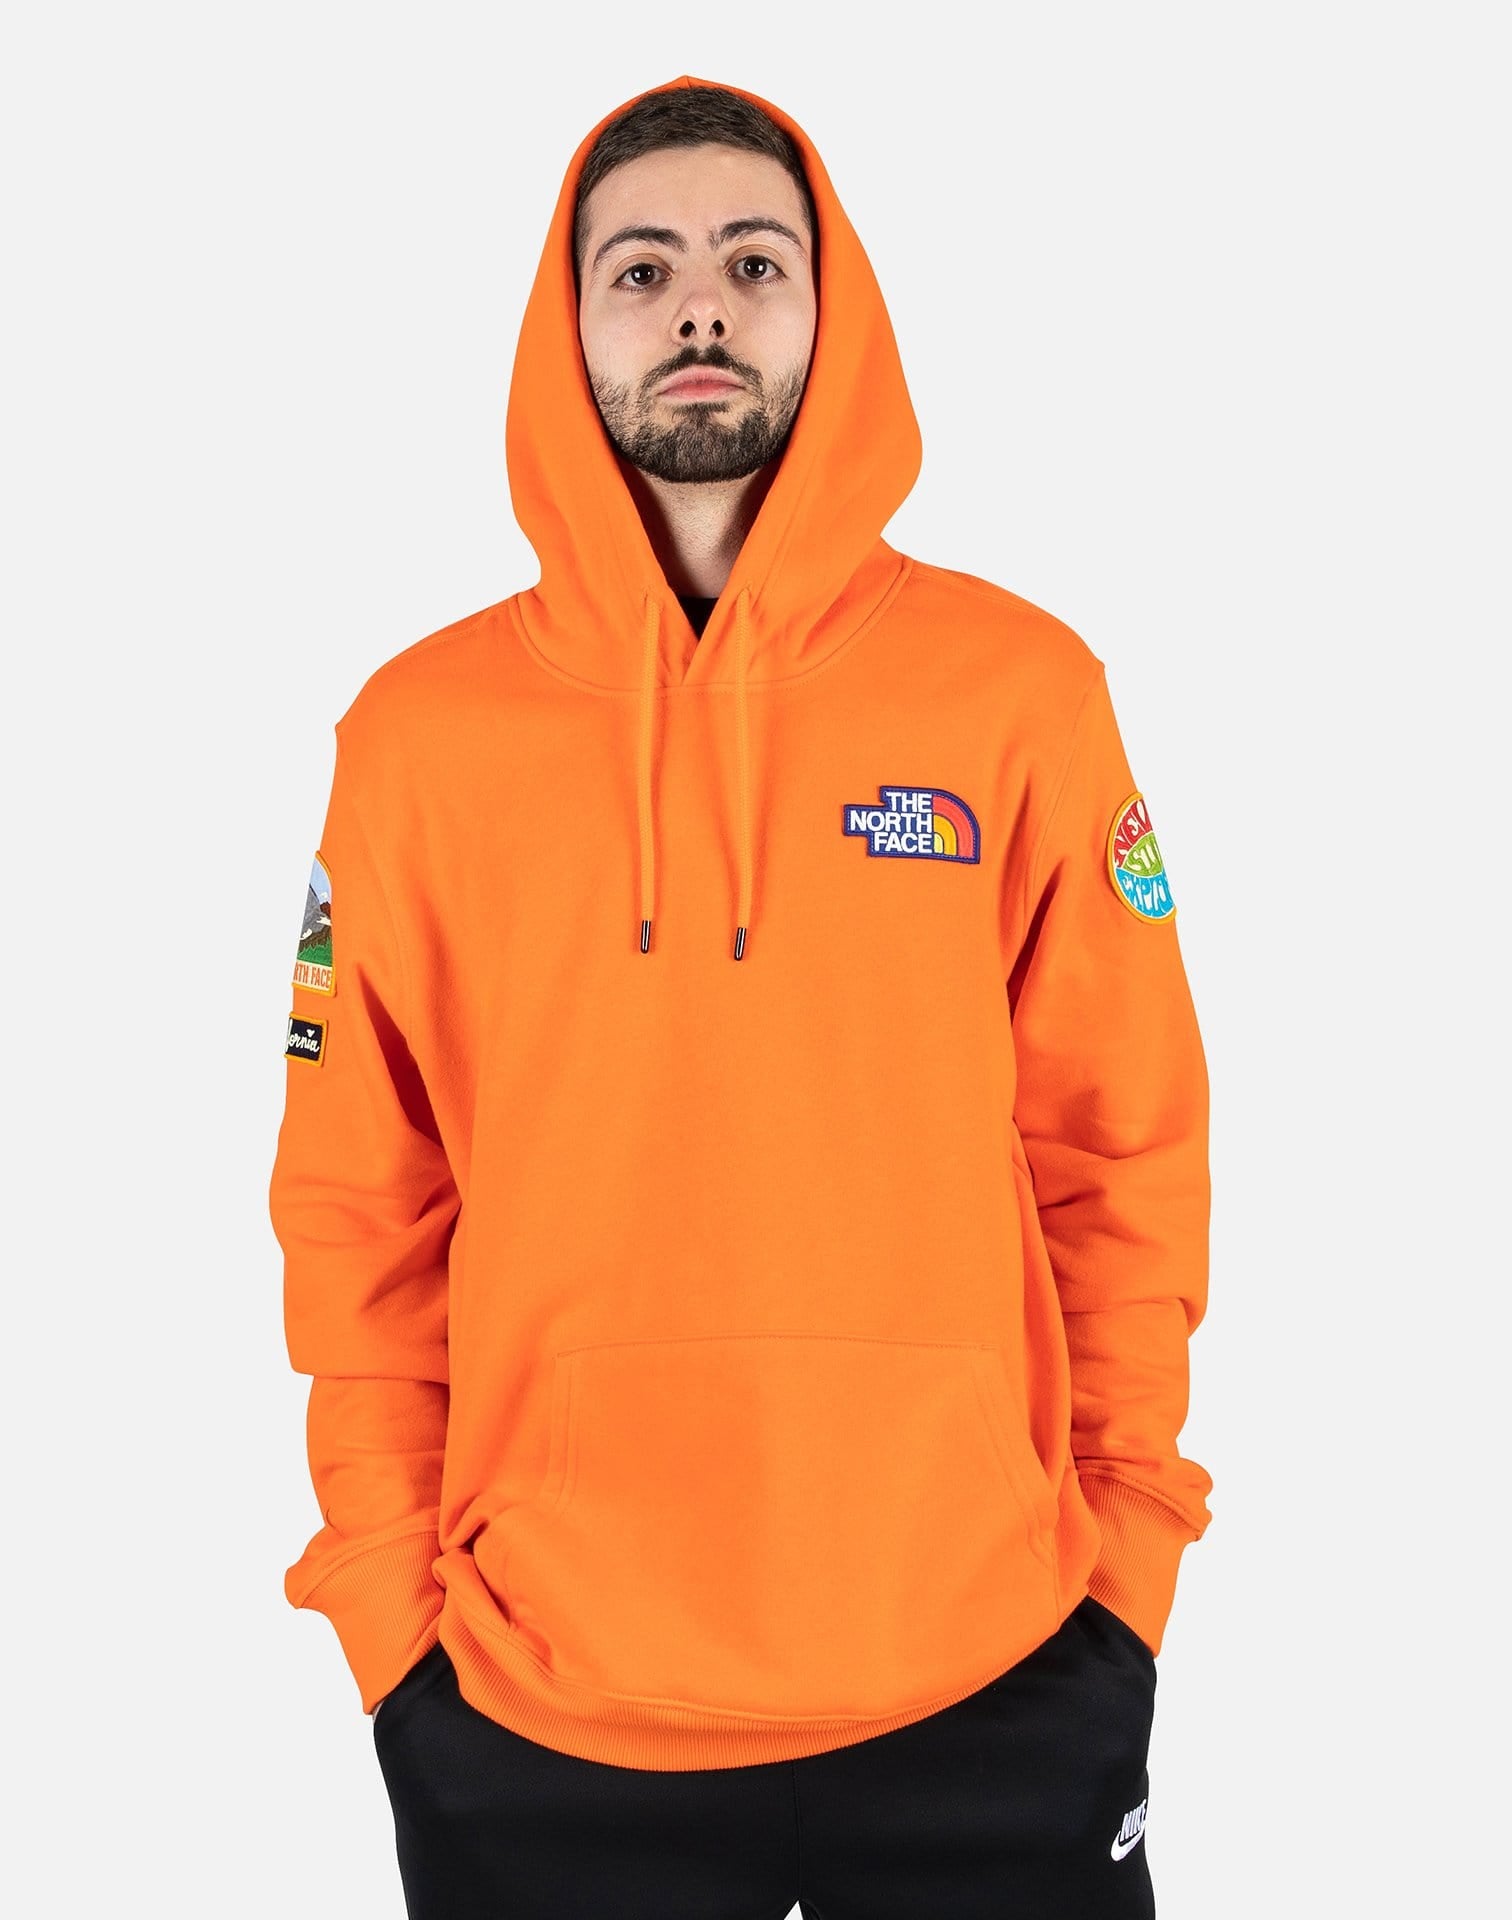 the north face orange hoodie